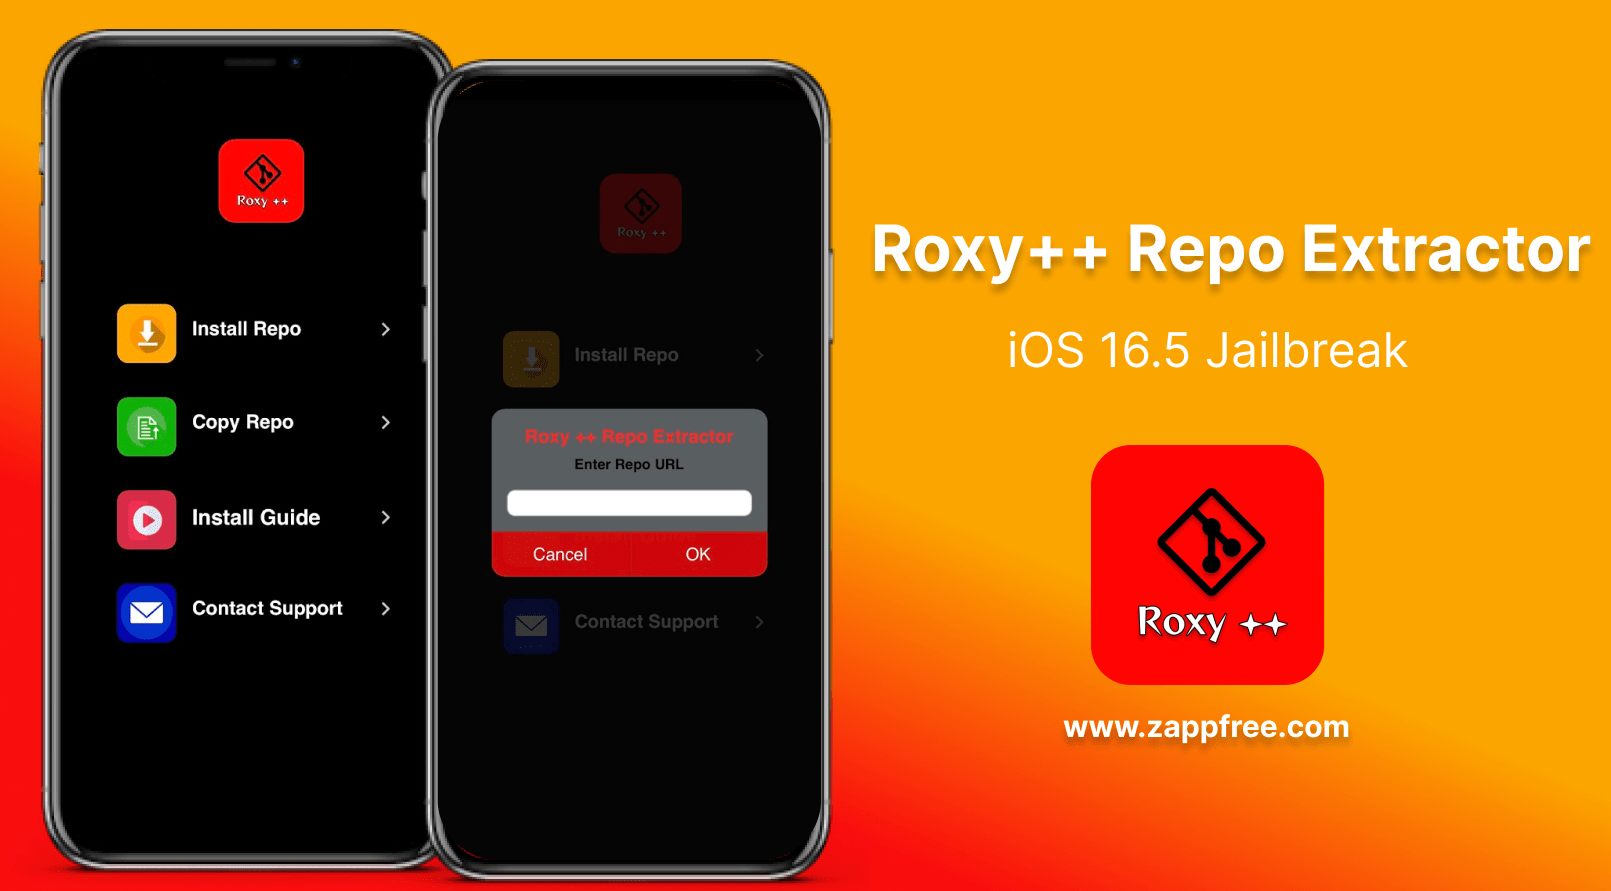 Roxy ++ for iOS 16.5 Jailbreak